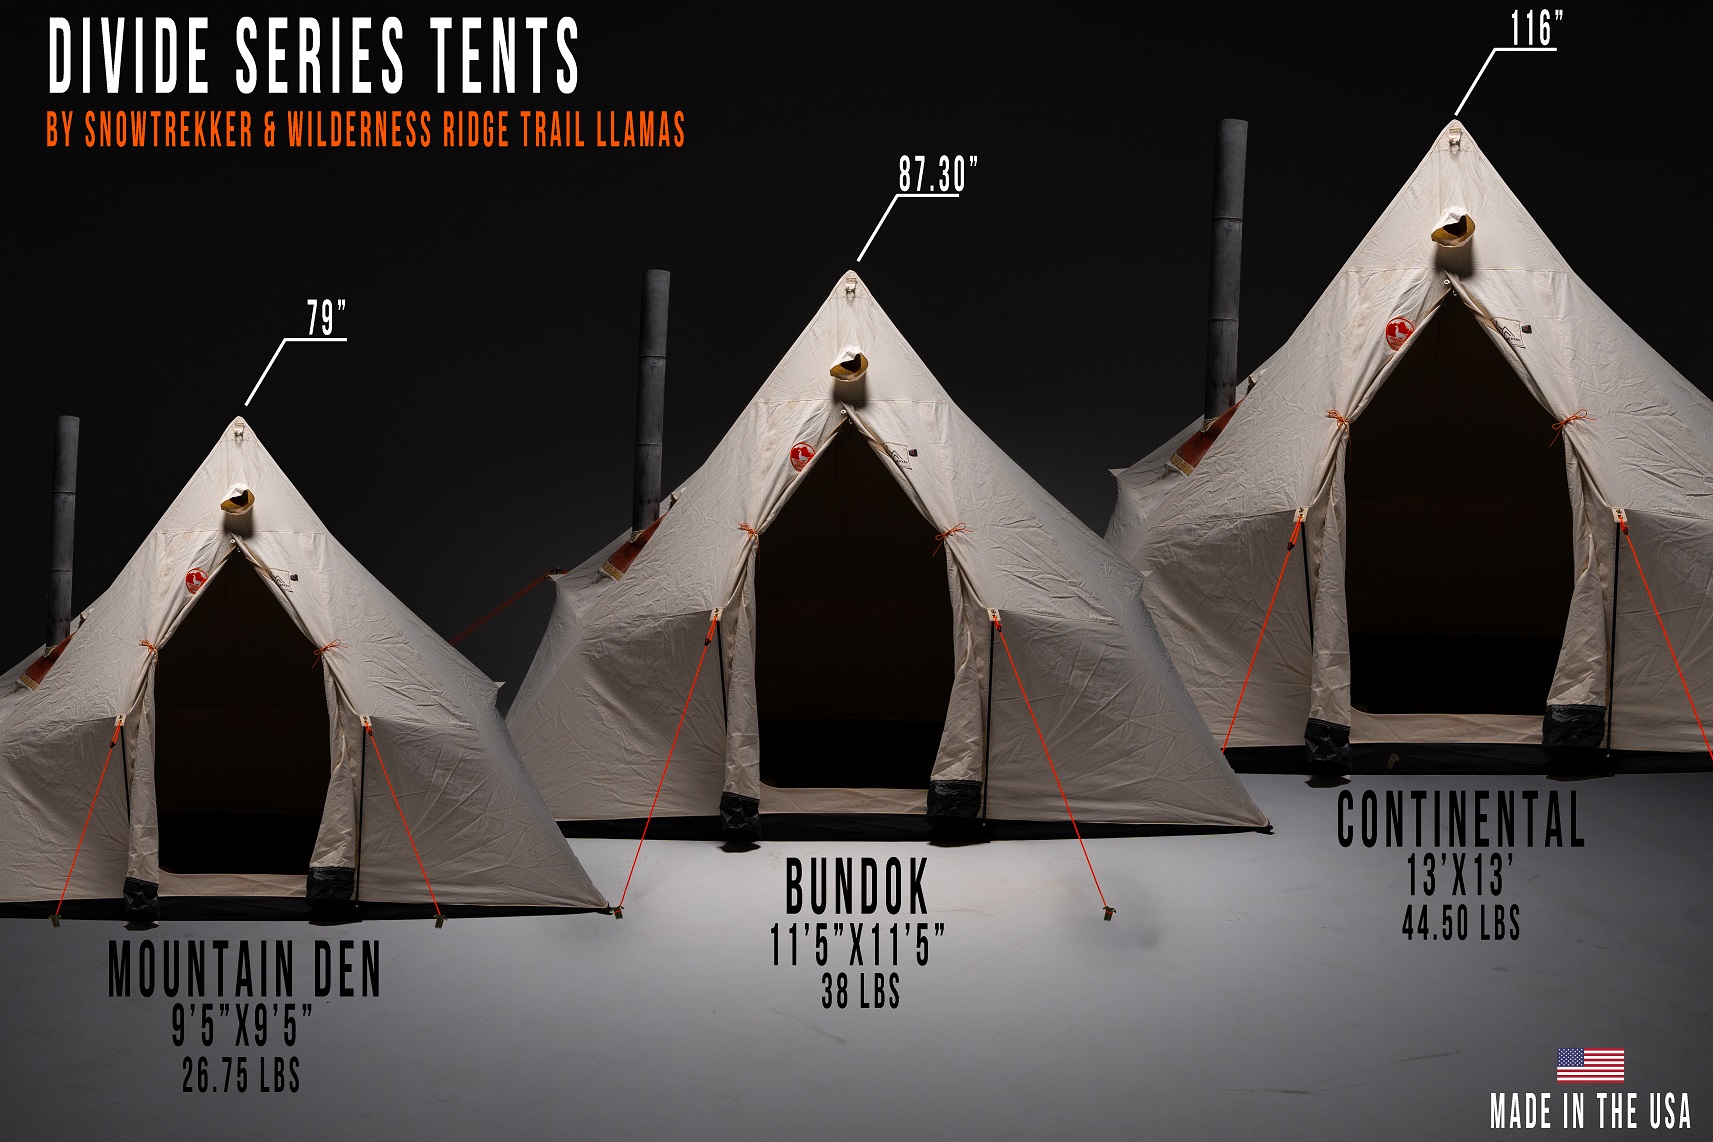 3 llama tents divide series